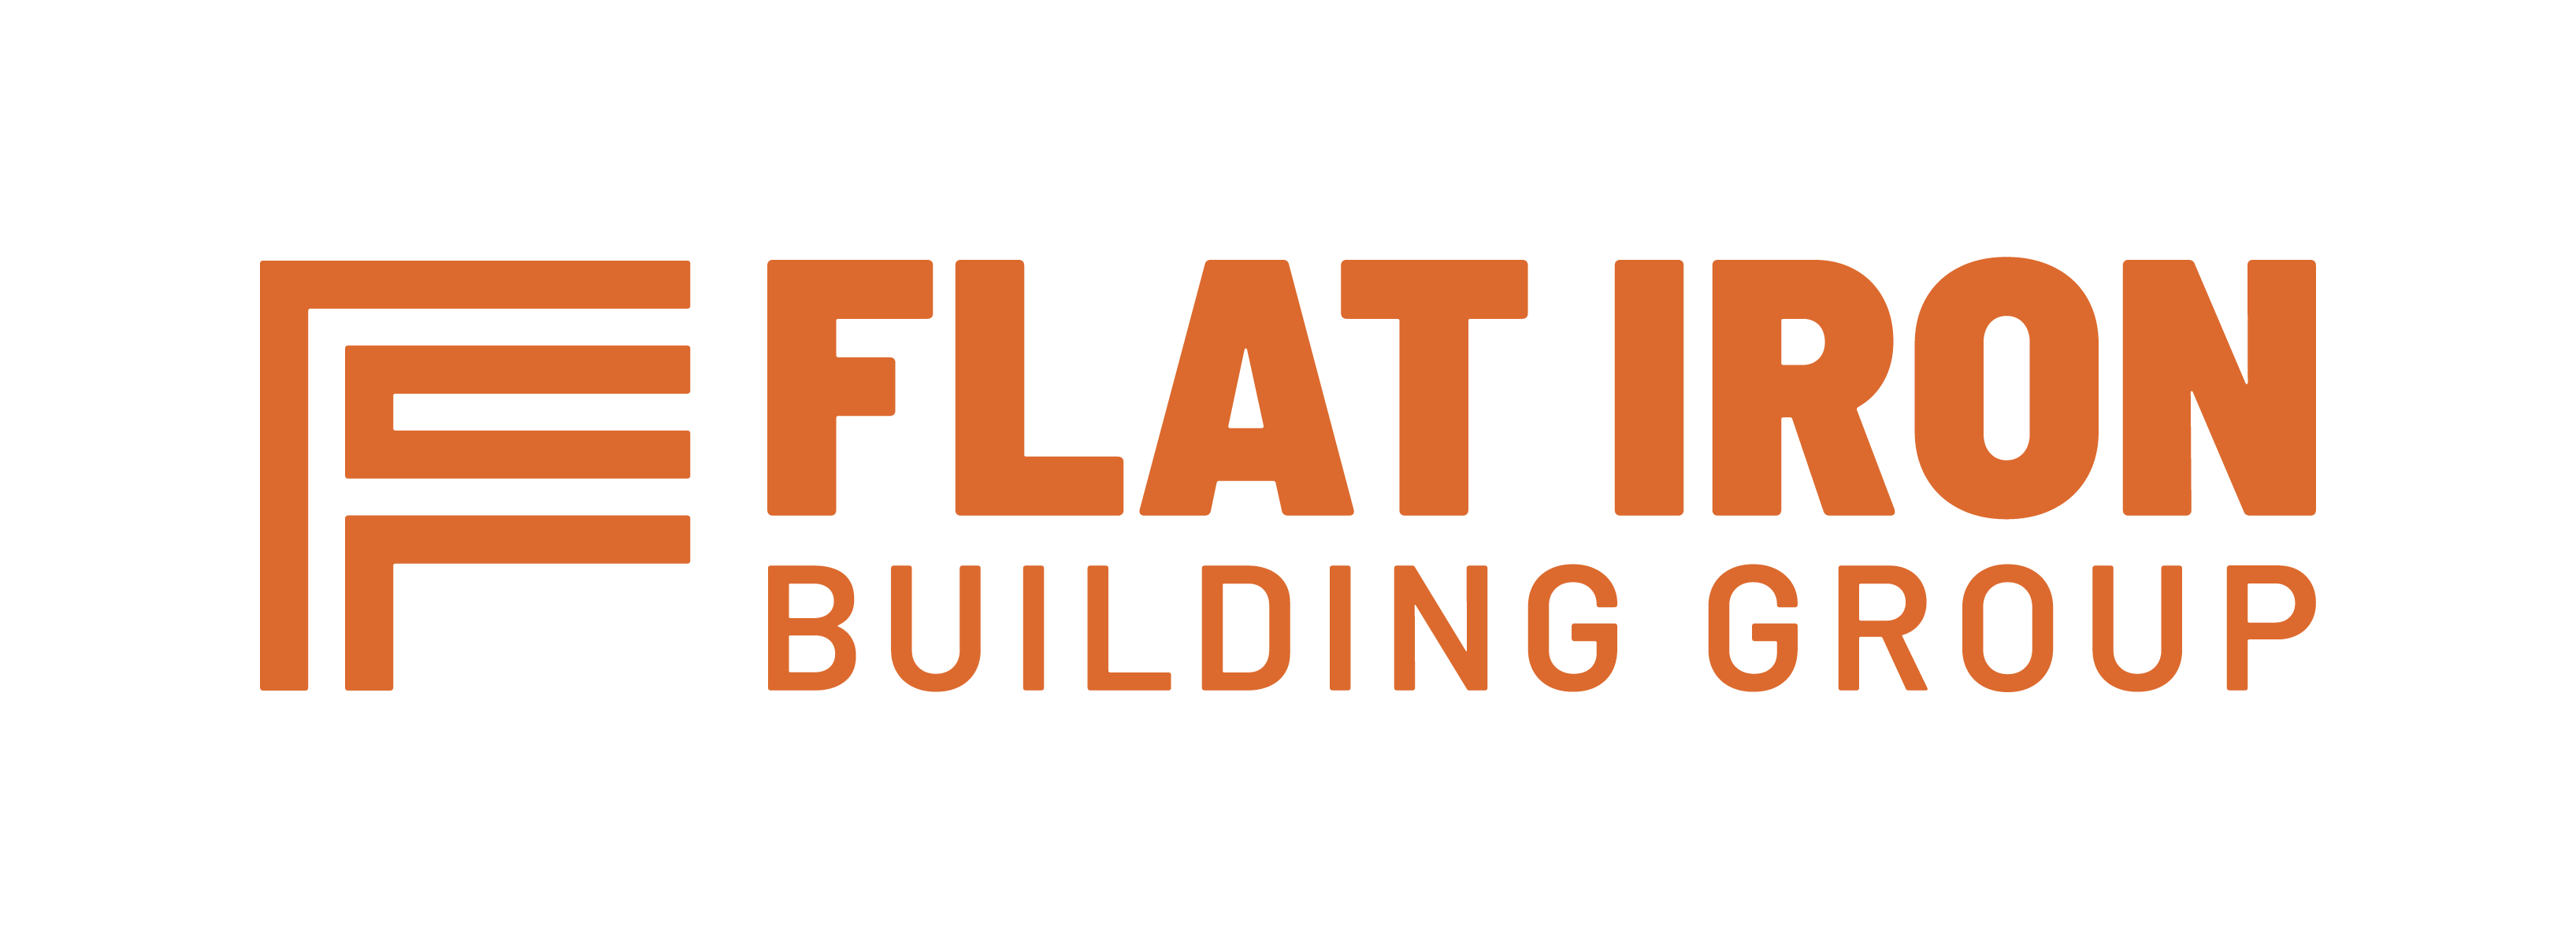 FLATIRON Building Group